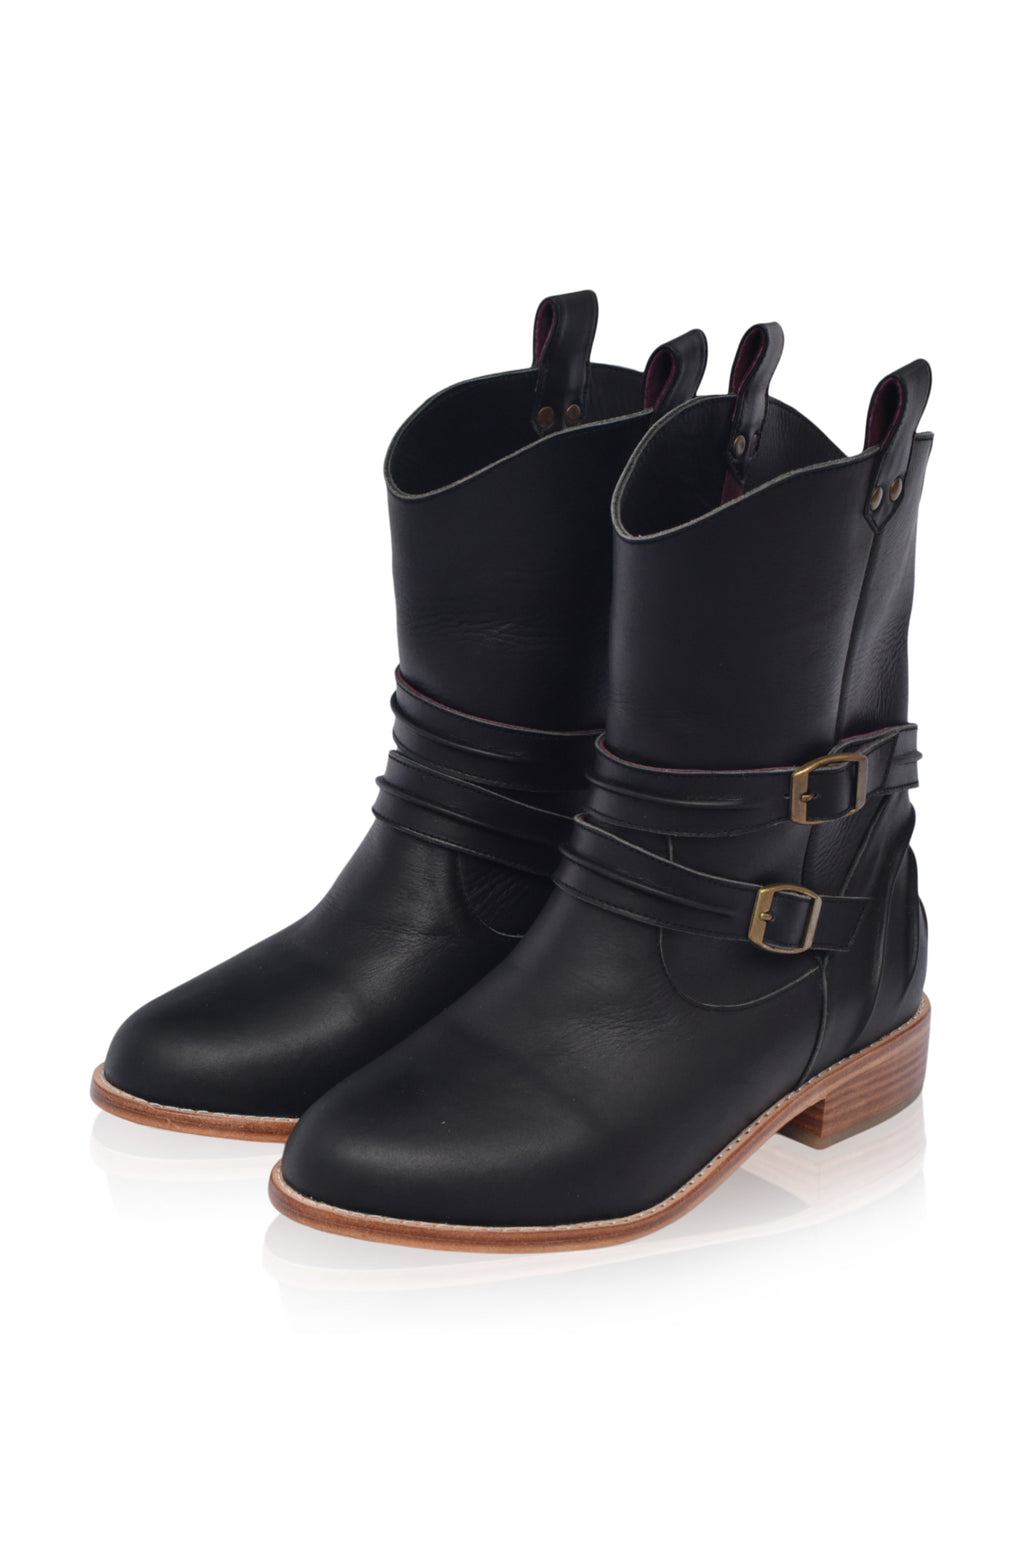 Barcelona Leather Boots (Sz. 9)